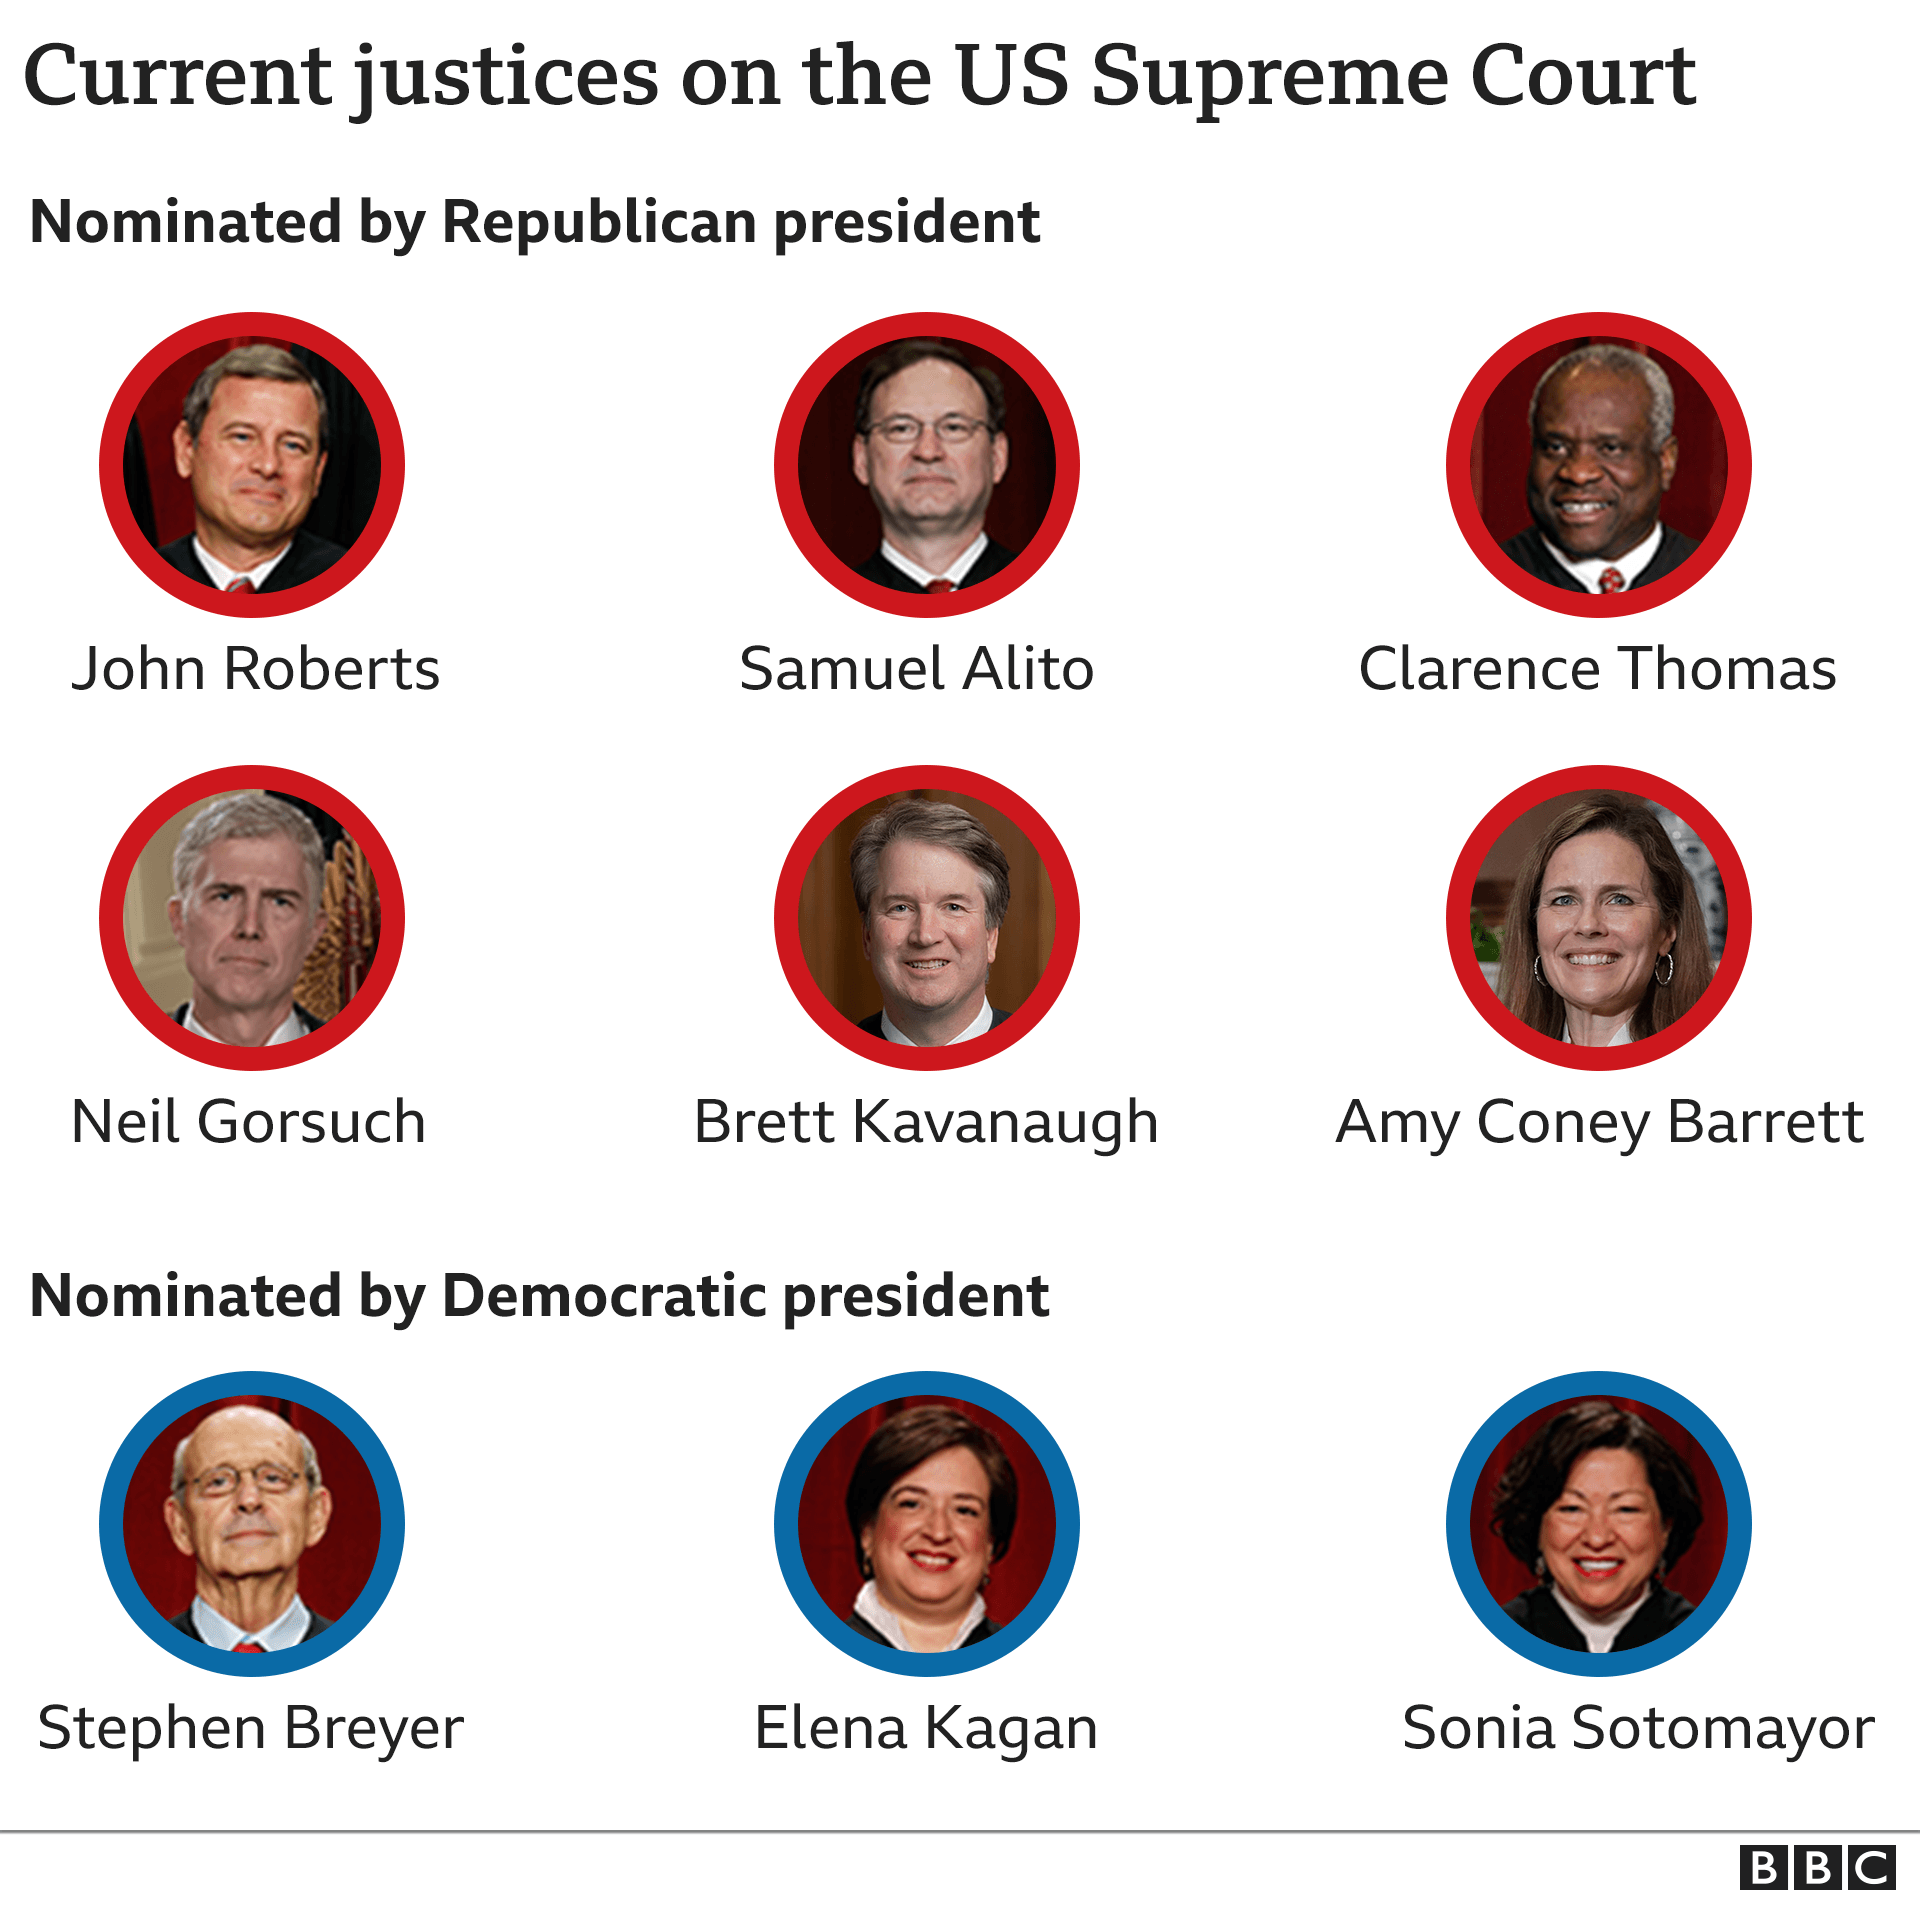 Current Supreme Court Justices